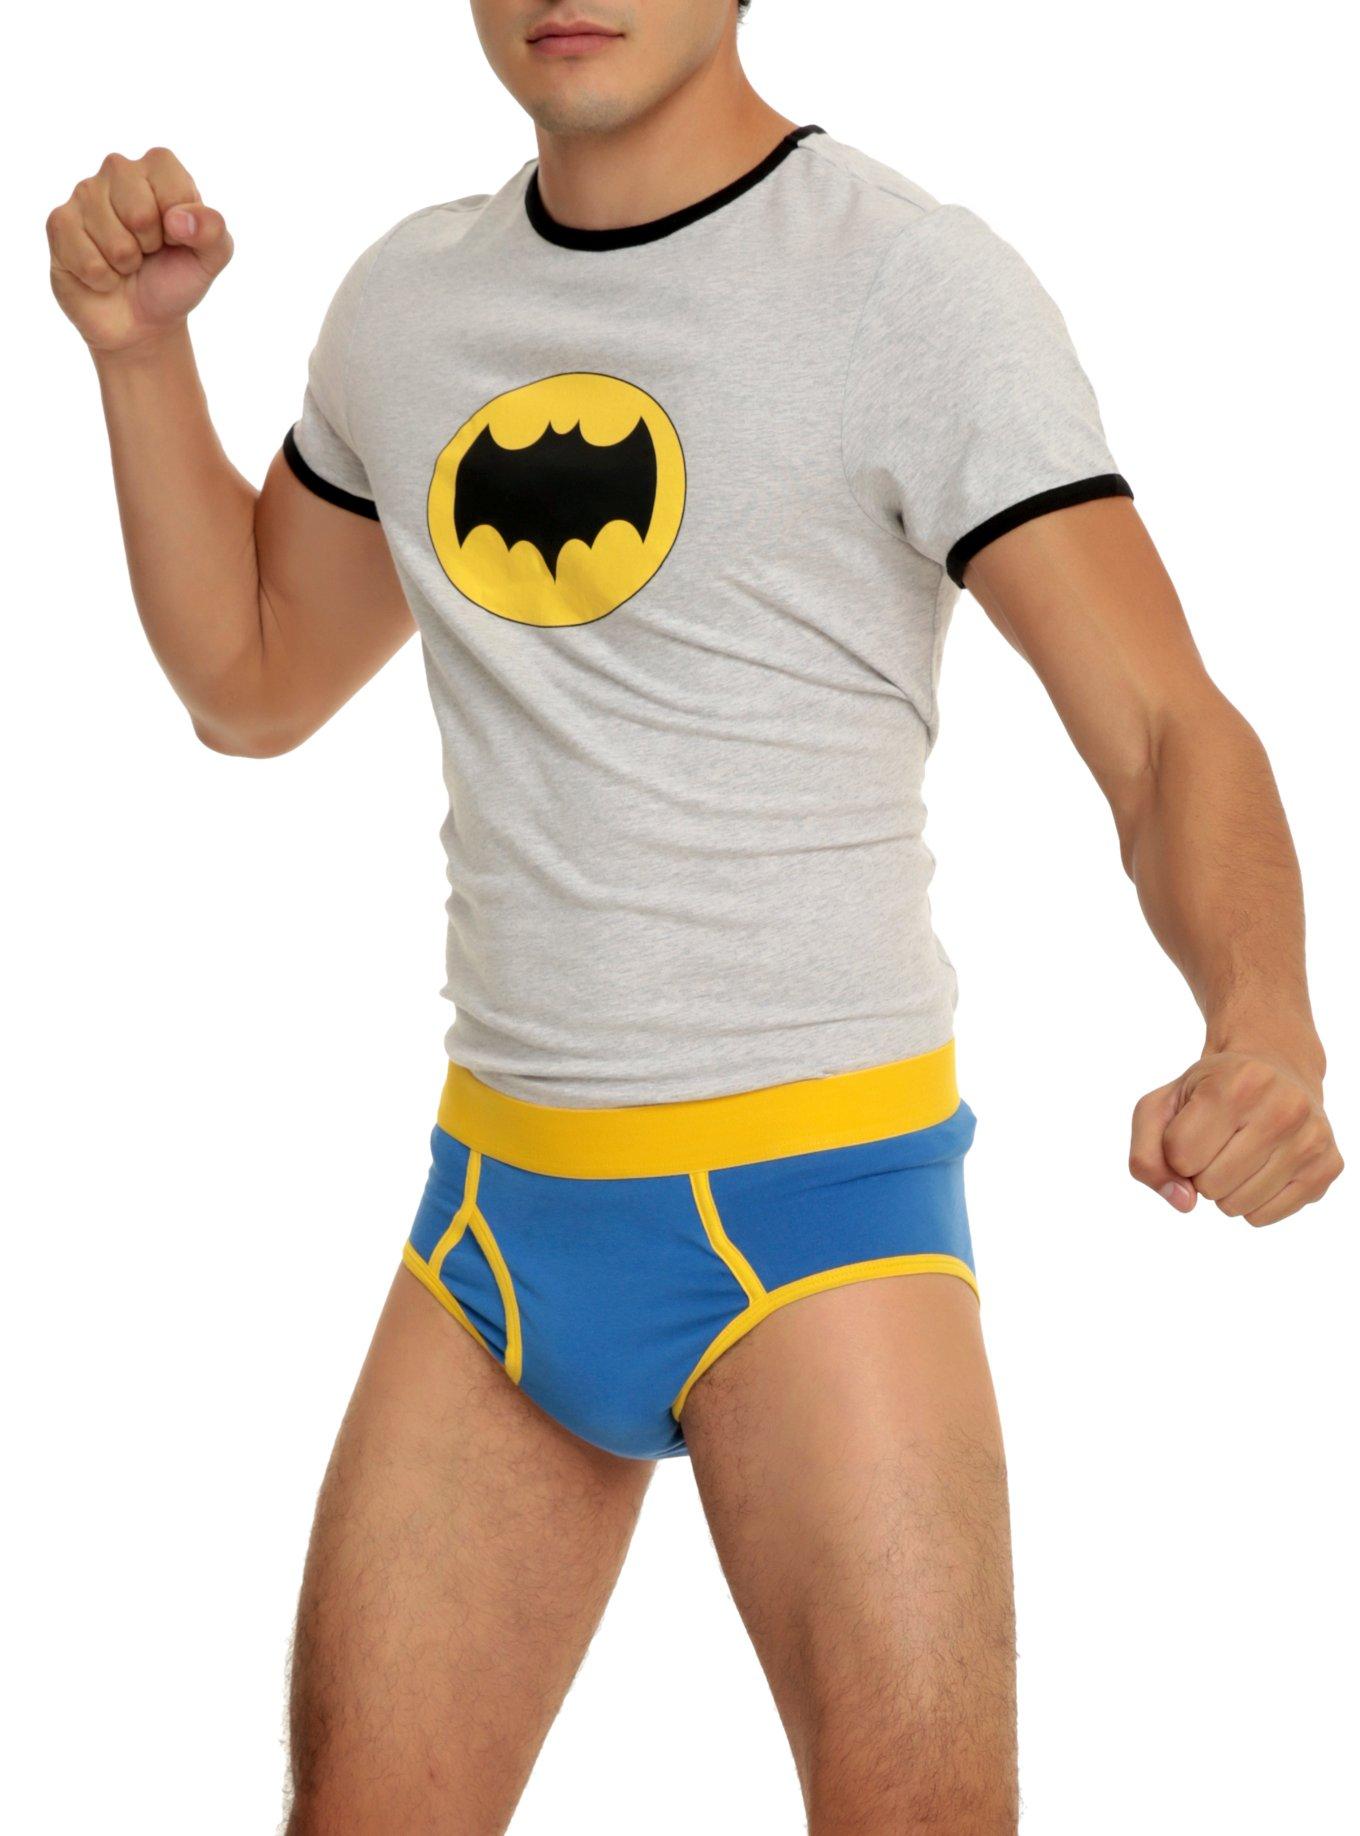 Underoos DC Comics Batman Guys Underwear Set, BLACK, hi-res